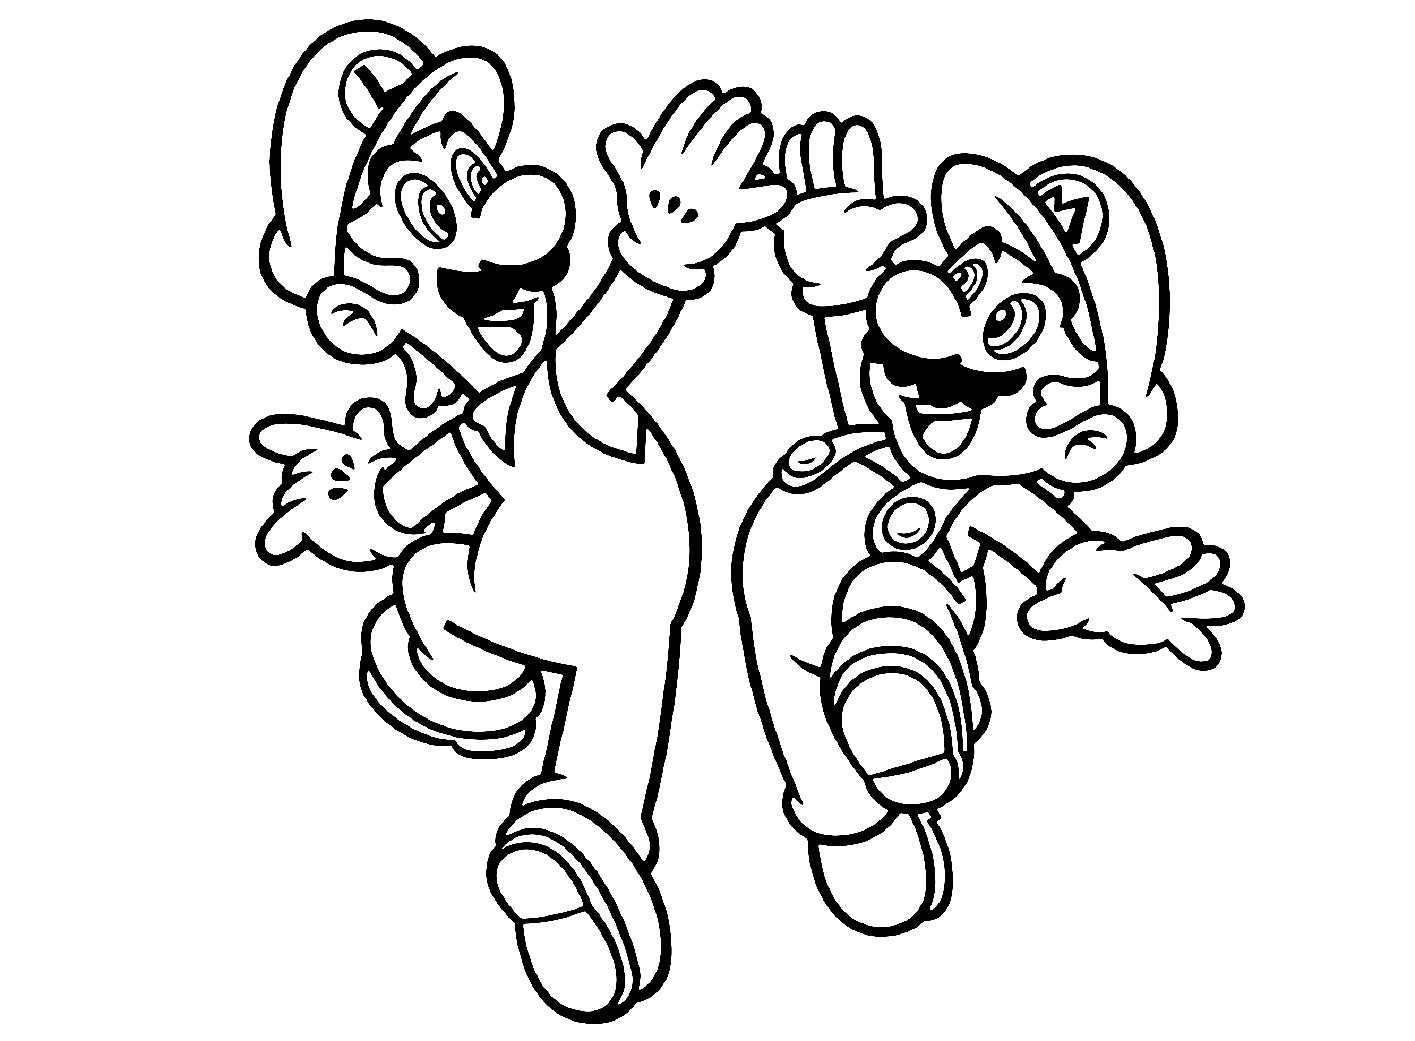 Happy Mario Brothers Coloring Page